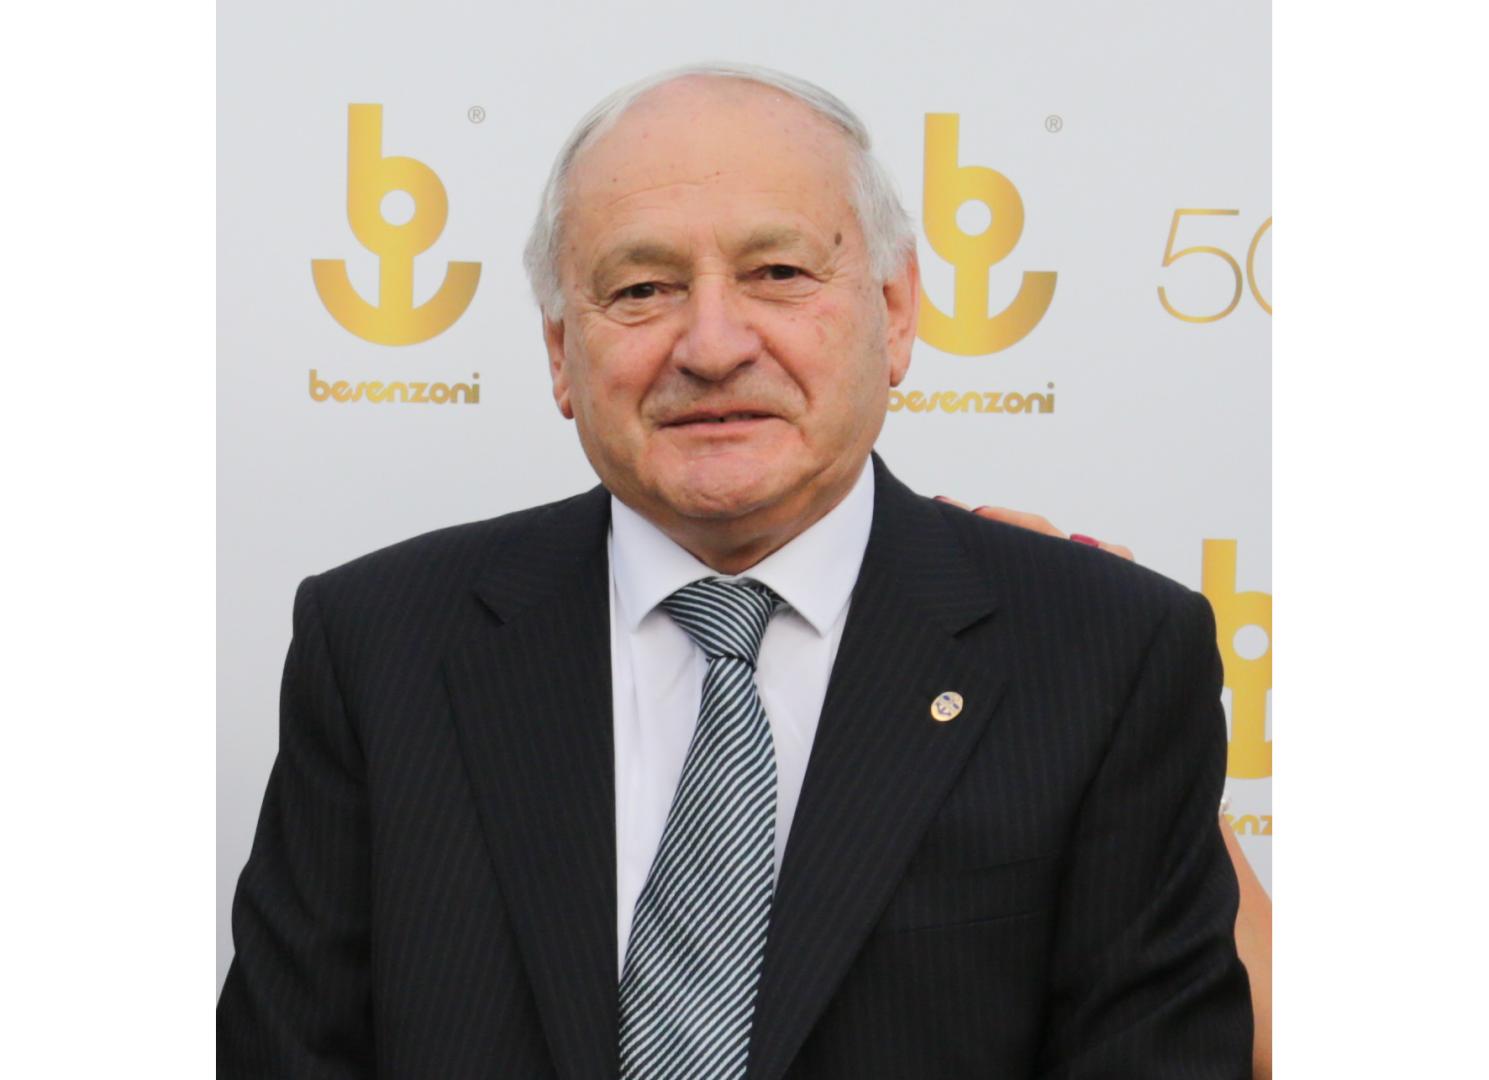 Giovanni Besenzoni, fondatore e presidente della Besenzoni SpA